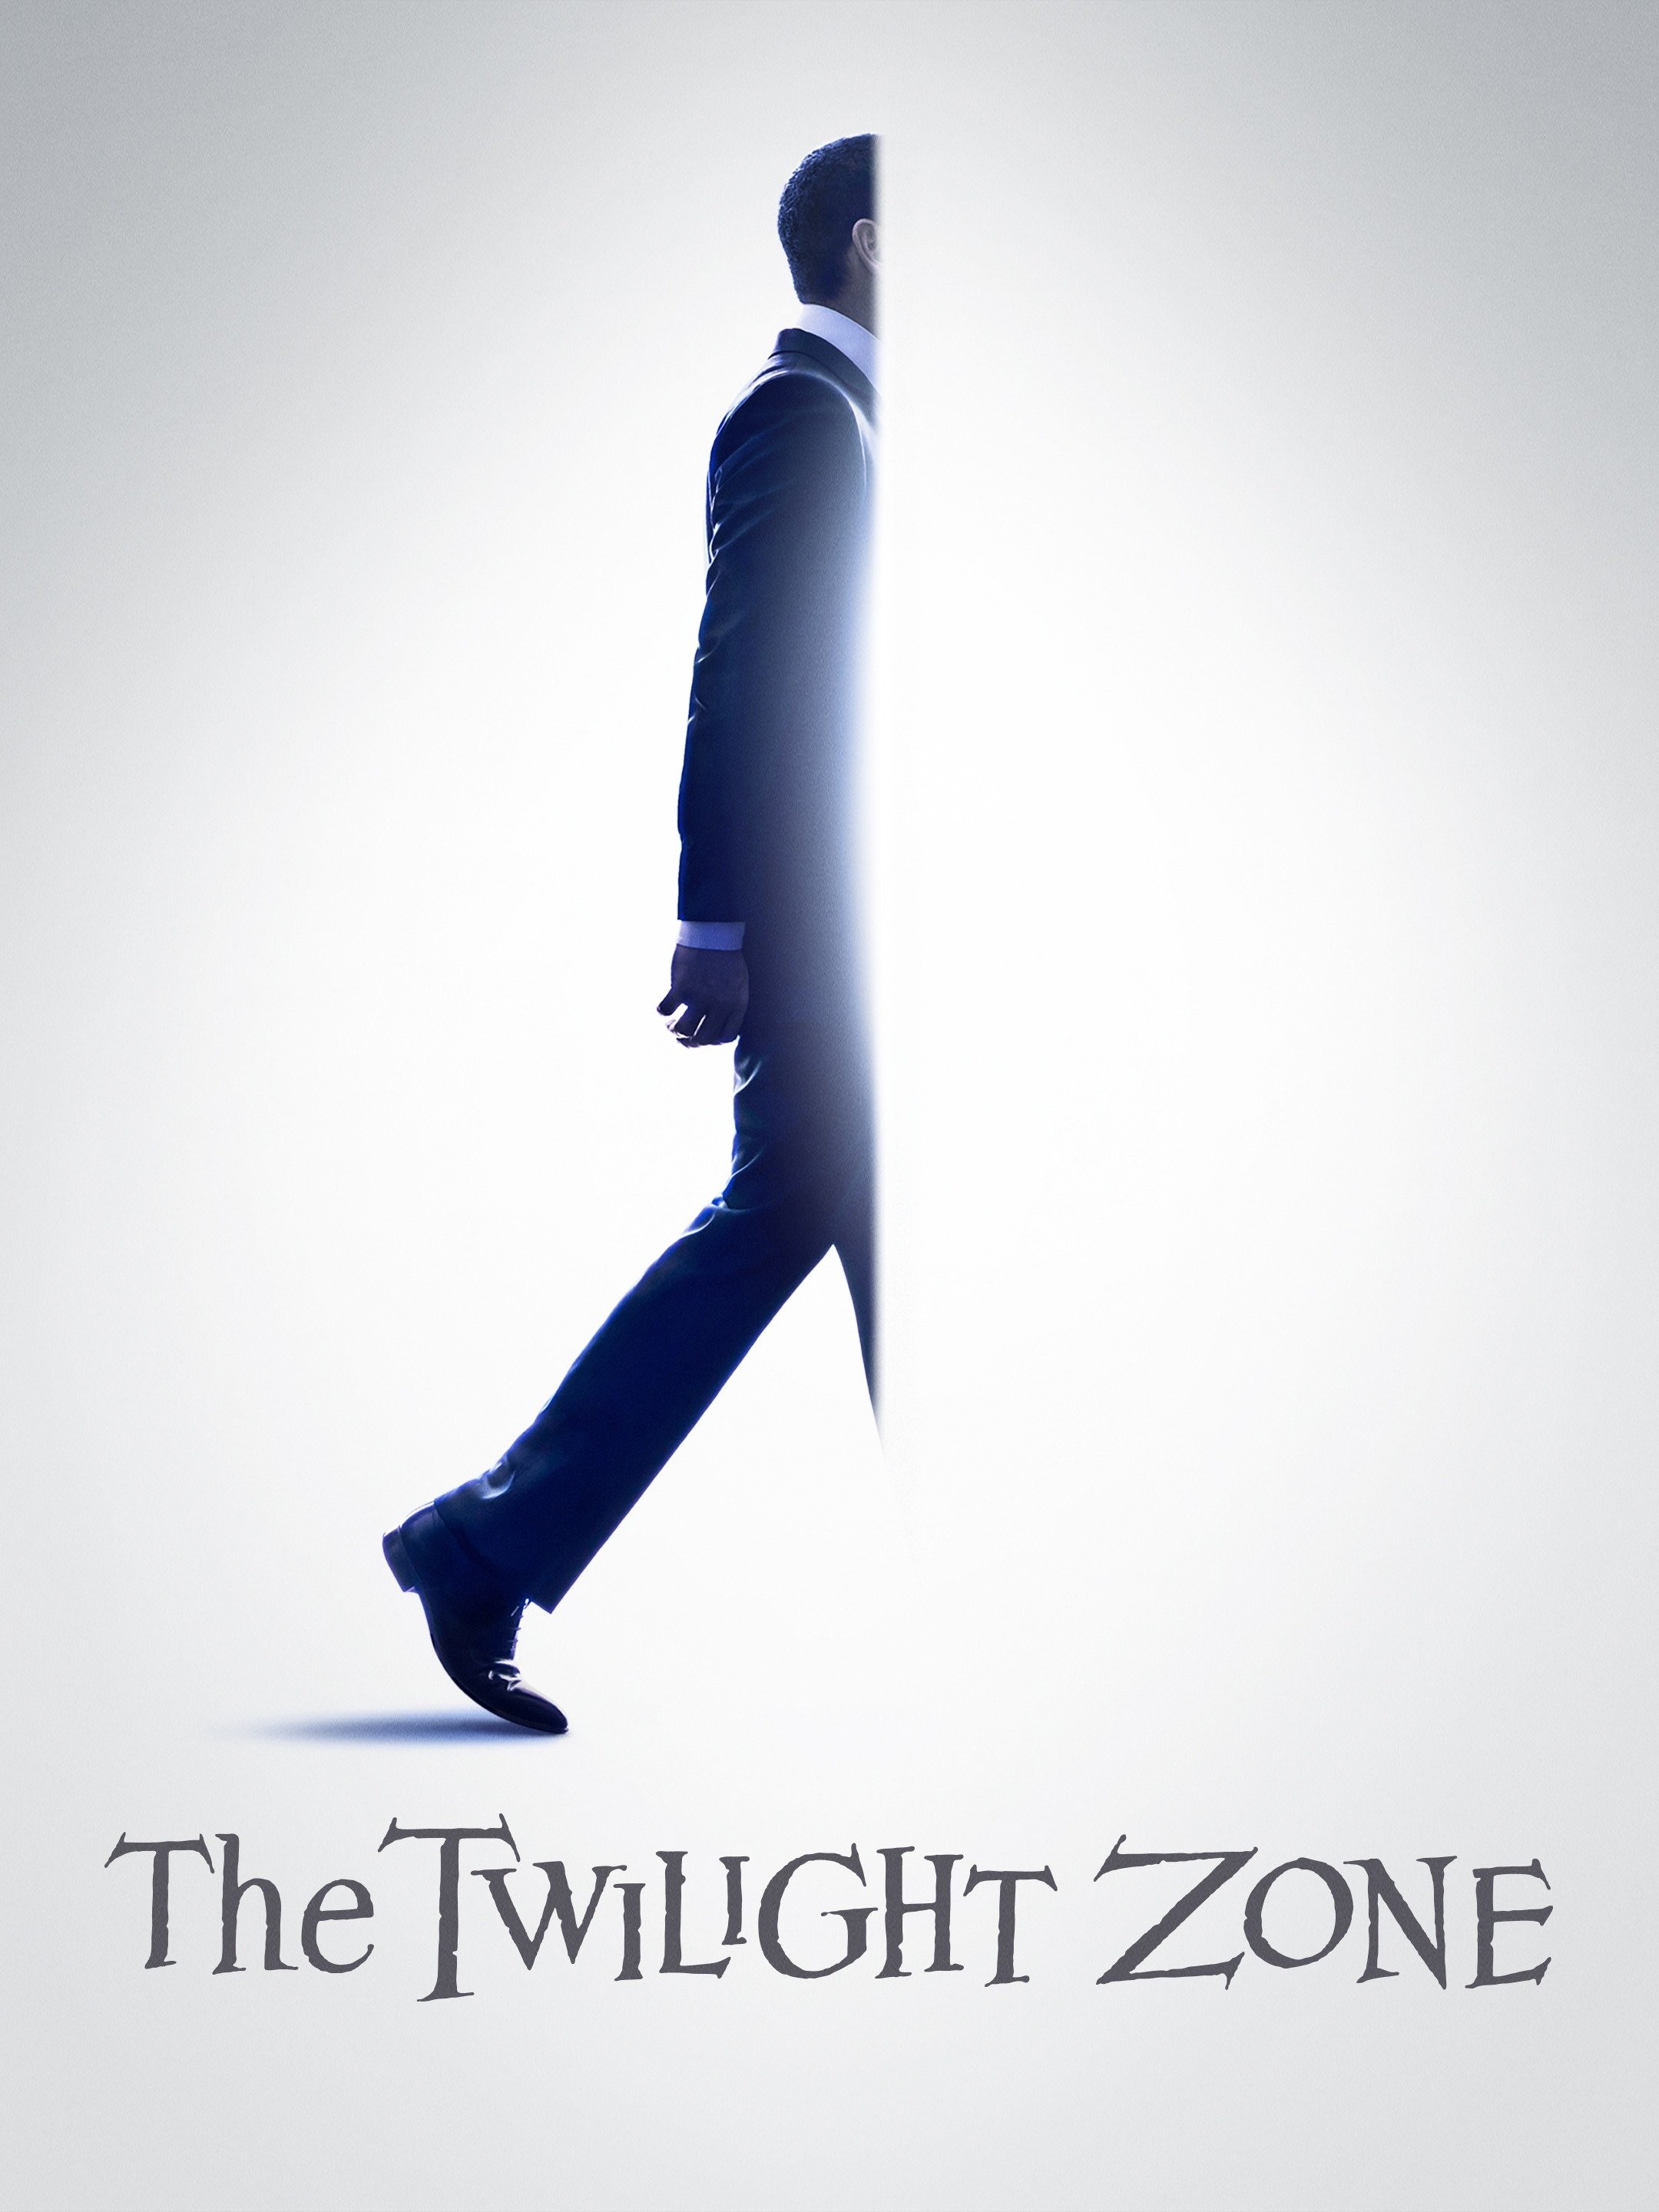 Jordan Peele Movie Us Is Based On Twilight Zone Episode The